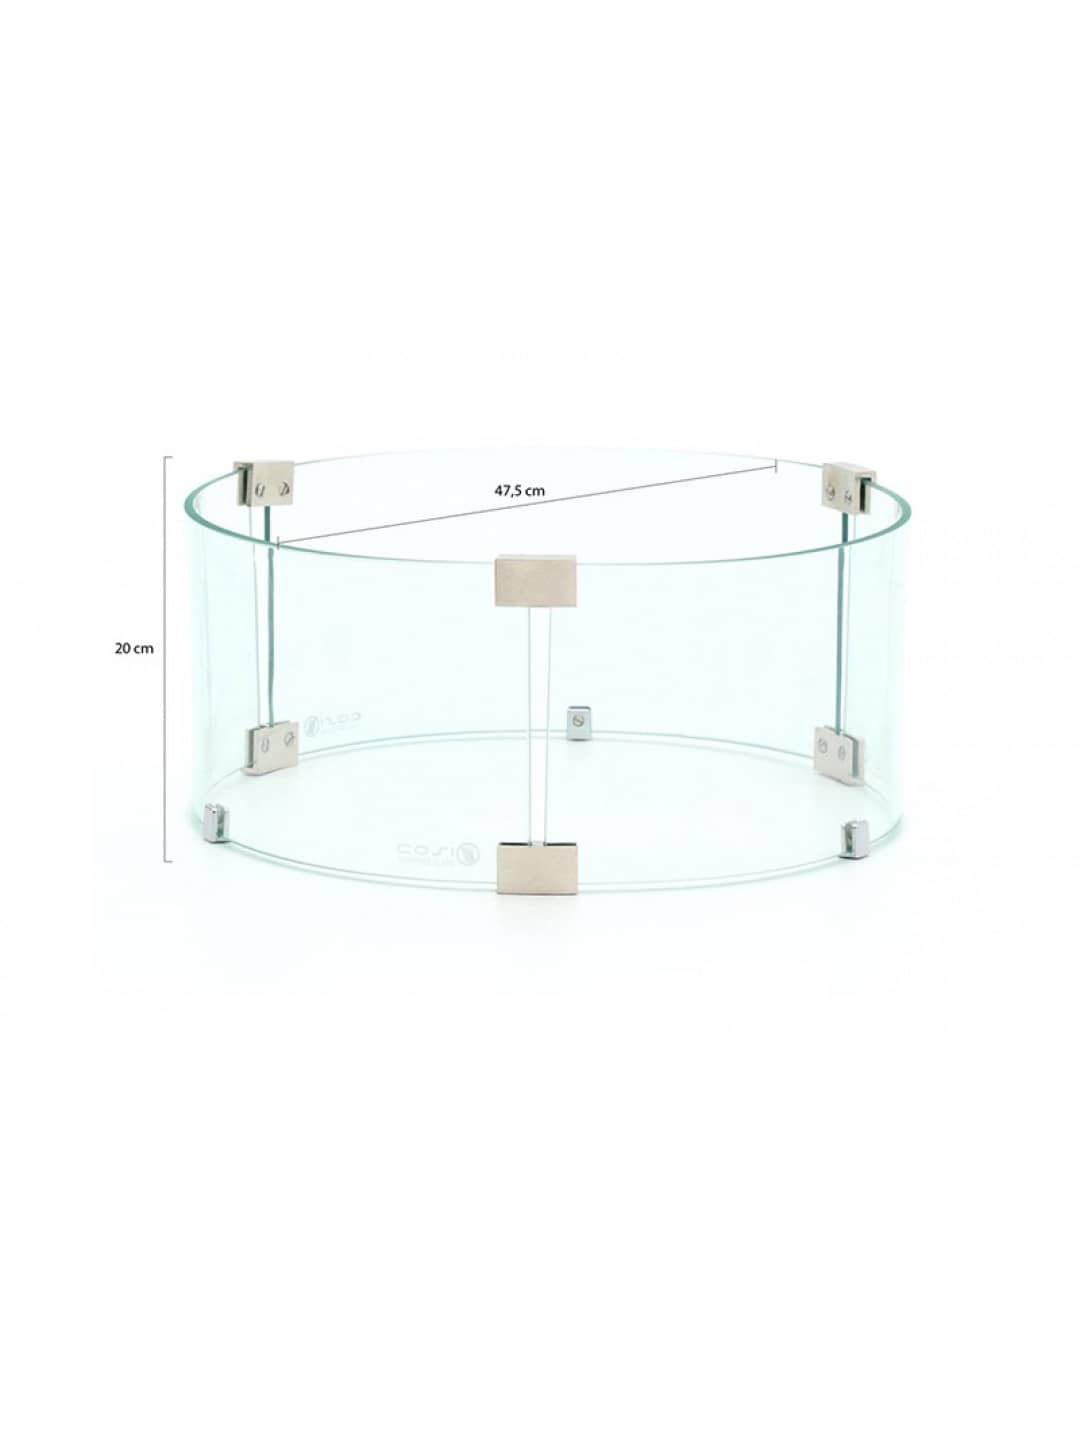 Розміри захисного скла Cosi round glass set L